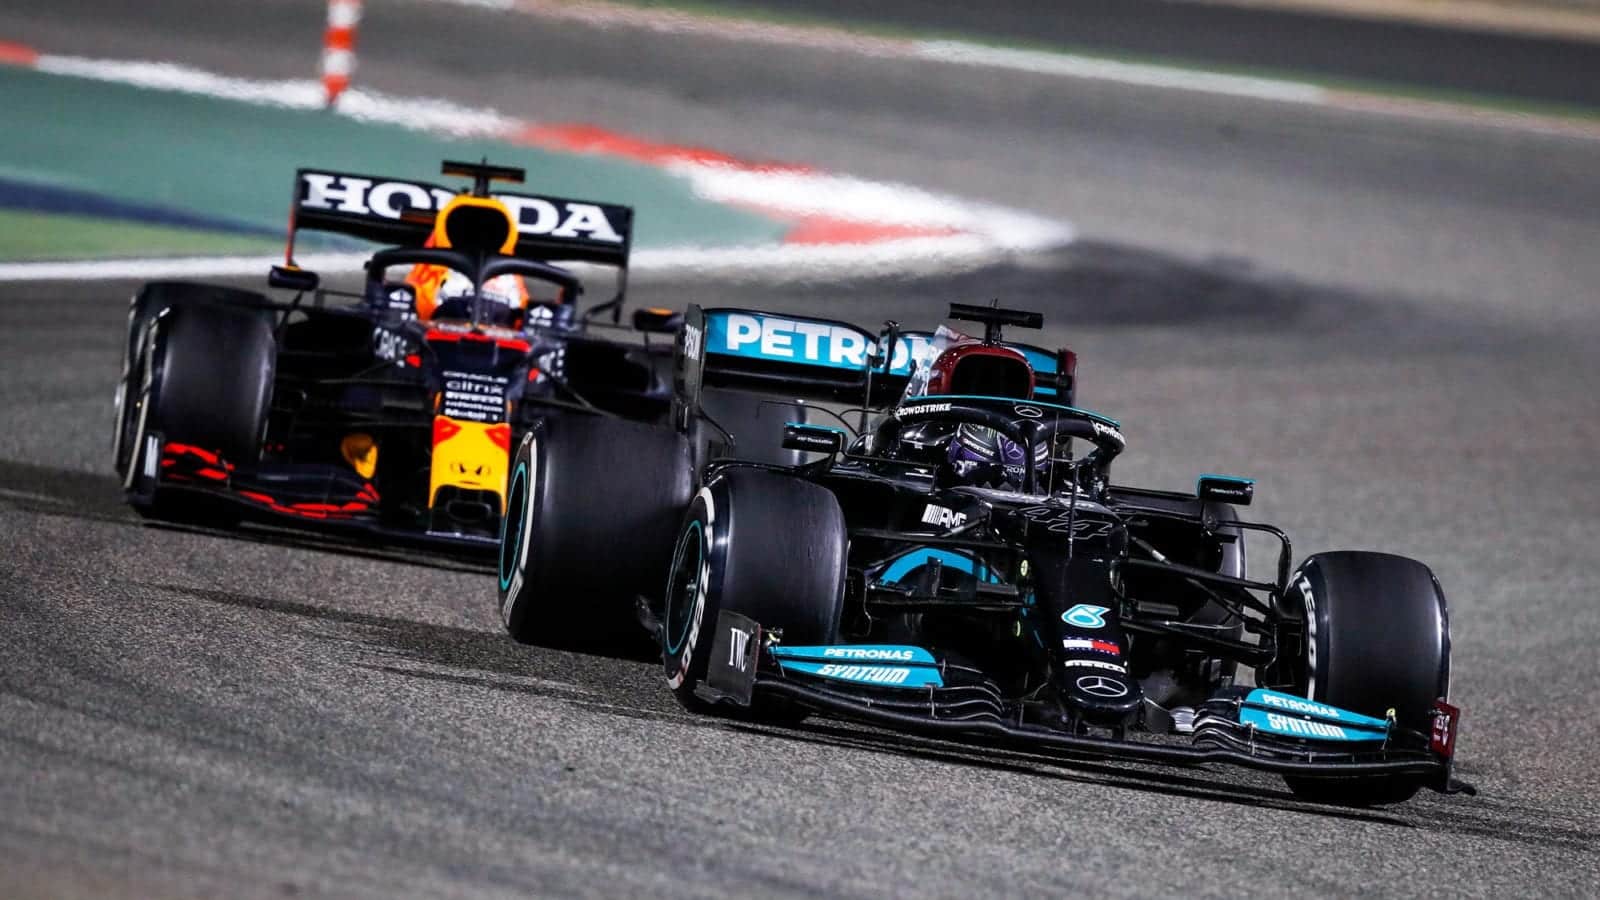 Max Verstappen follows Lewis Hamilton in the 2021 Bahrain Grand Prix